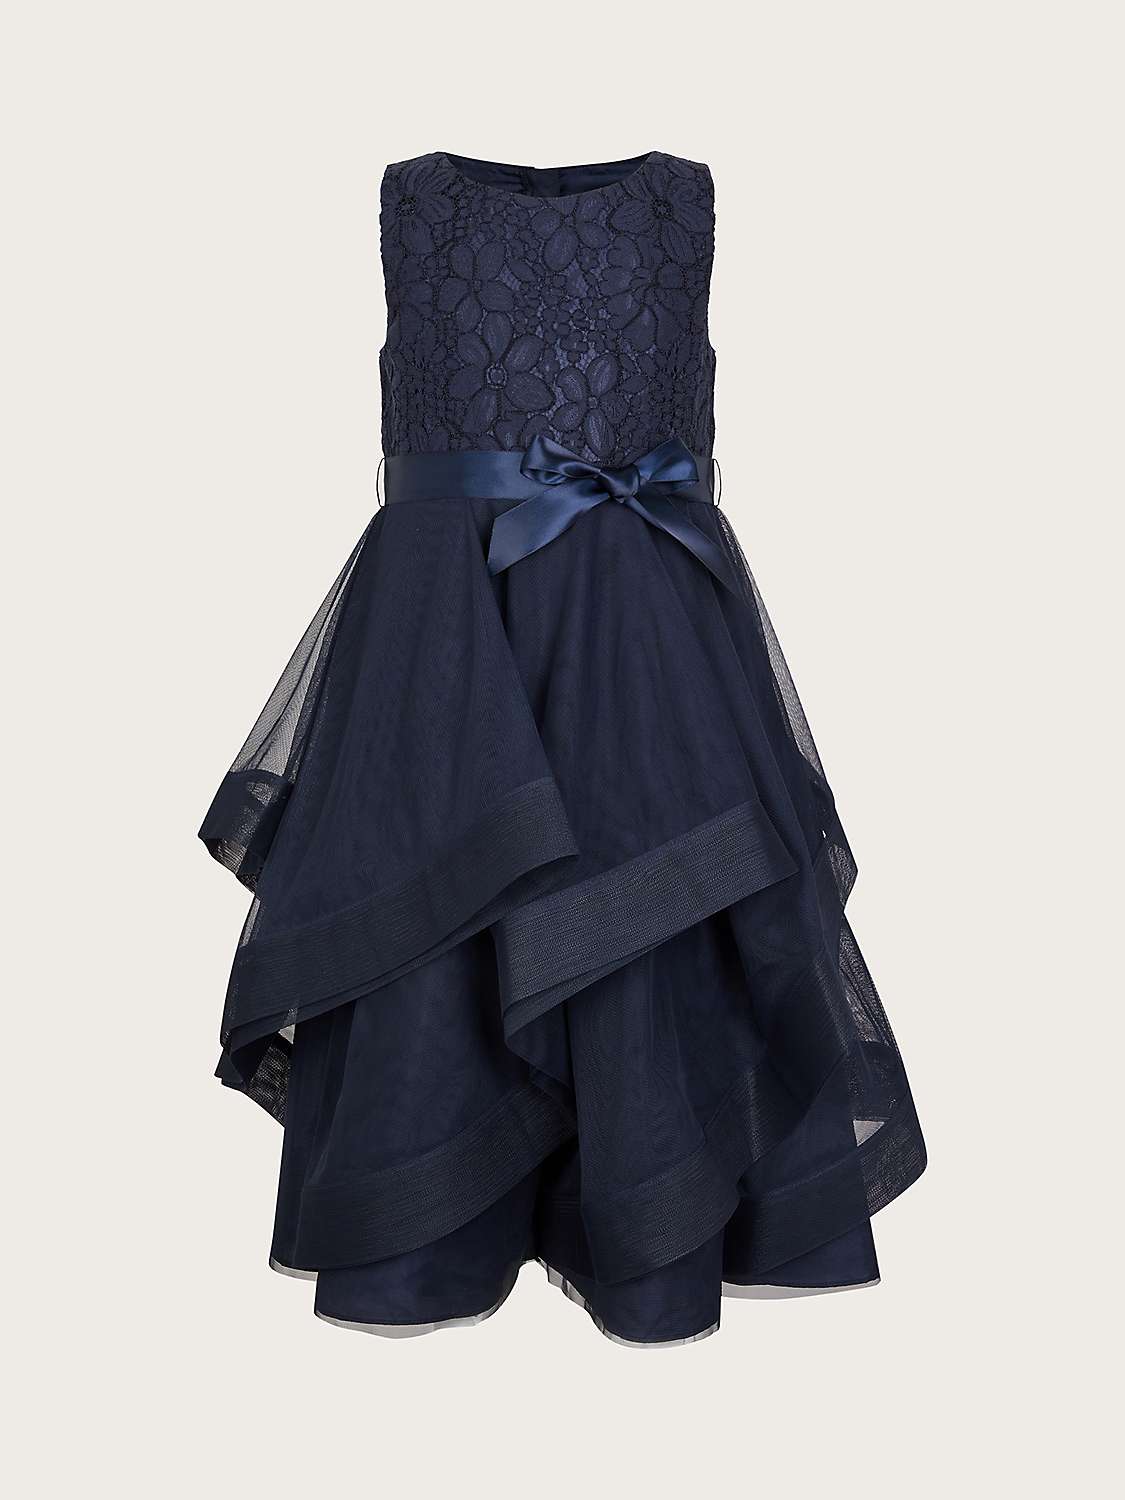 Buy Monsoon KIds' Seville Ruffle Party Dress, Navy Online at johnlewis.com